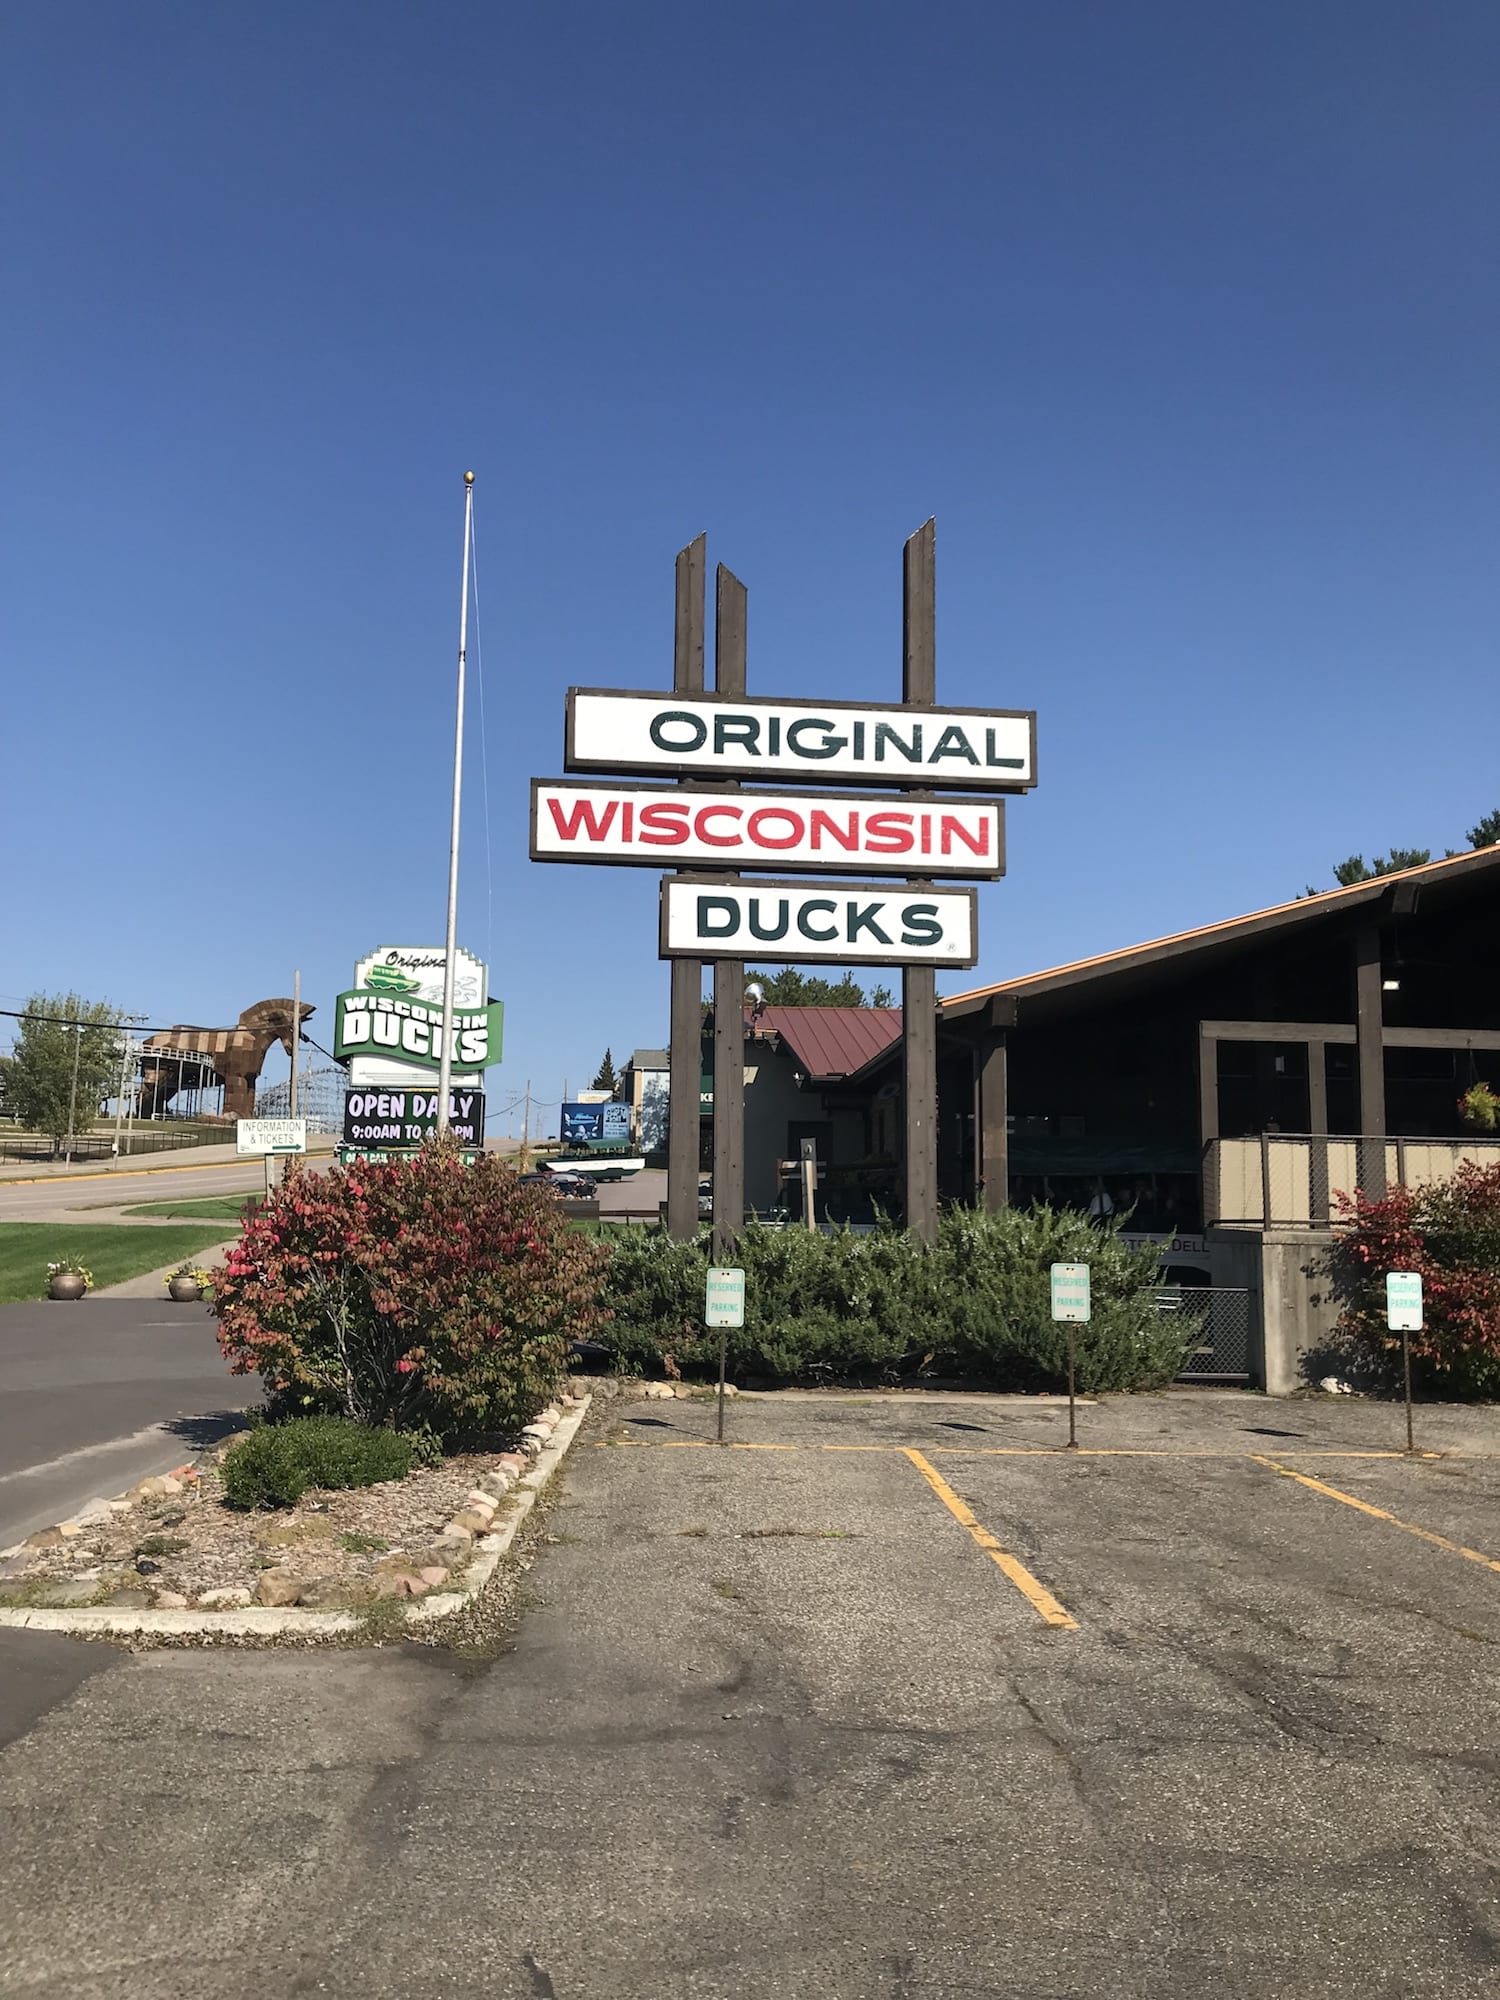 wisconsin ducks tour